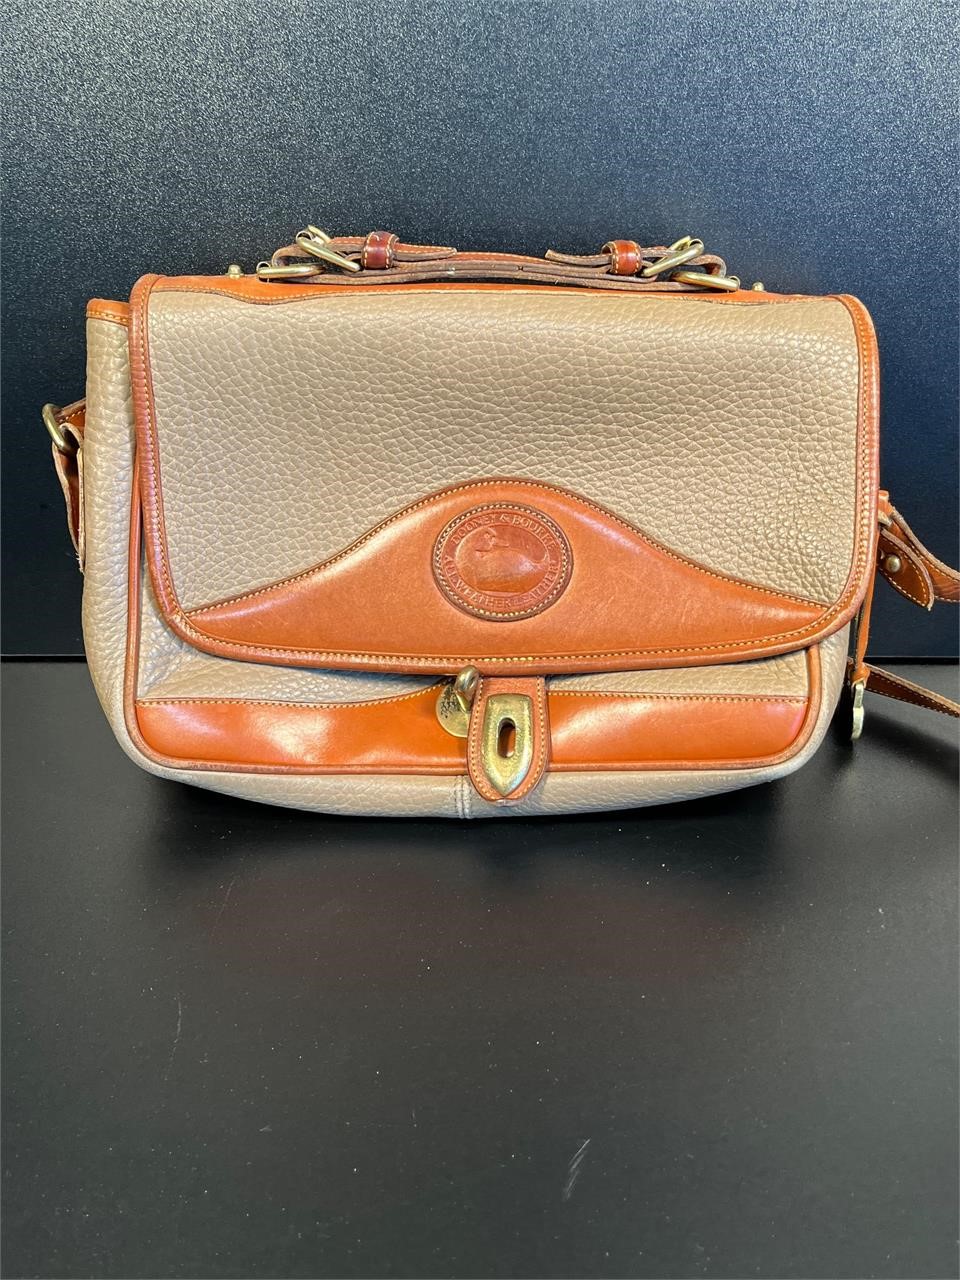 Vintage Dooney & Bourke Ladies Handbag